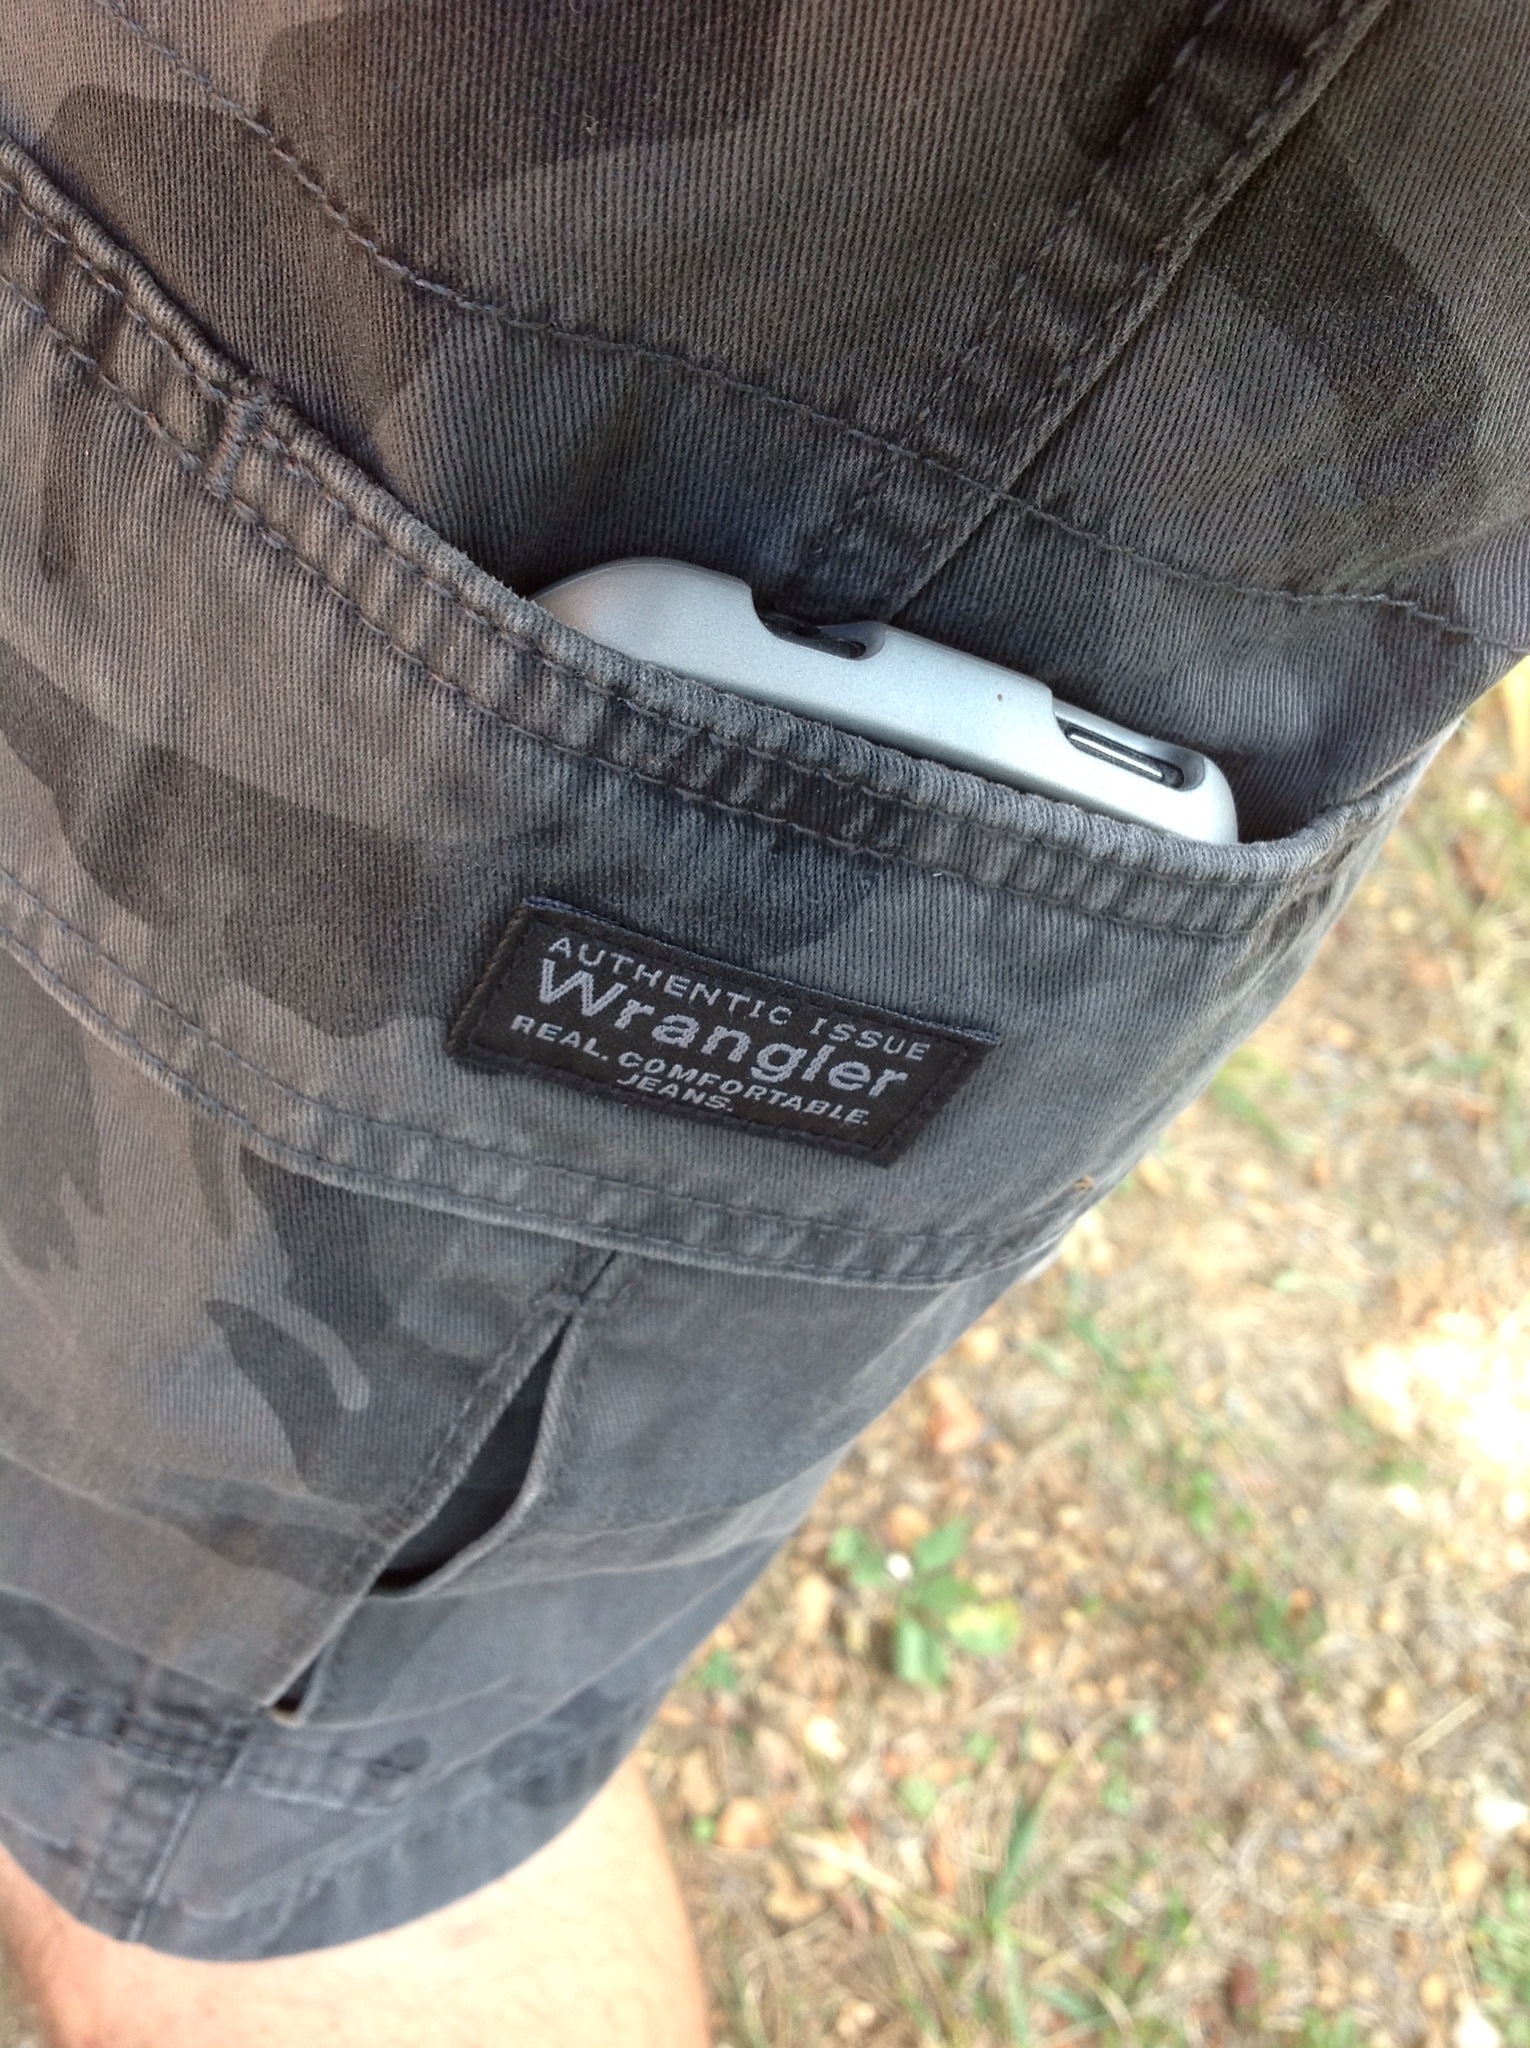 wrangler cargo pants with tech pocket